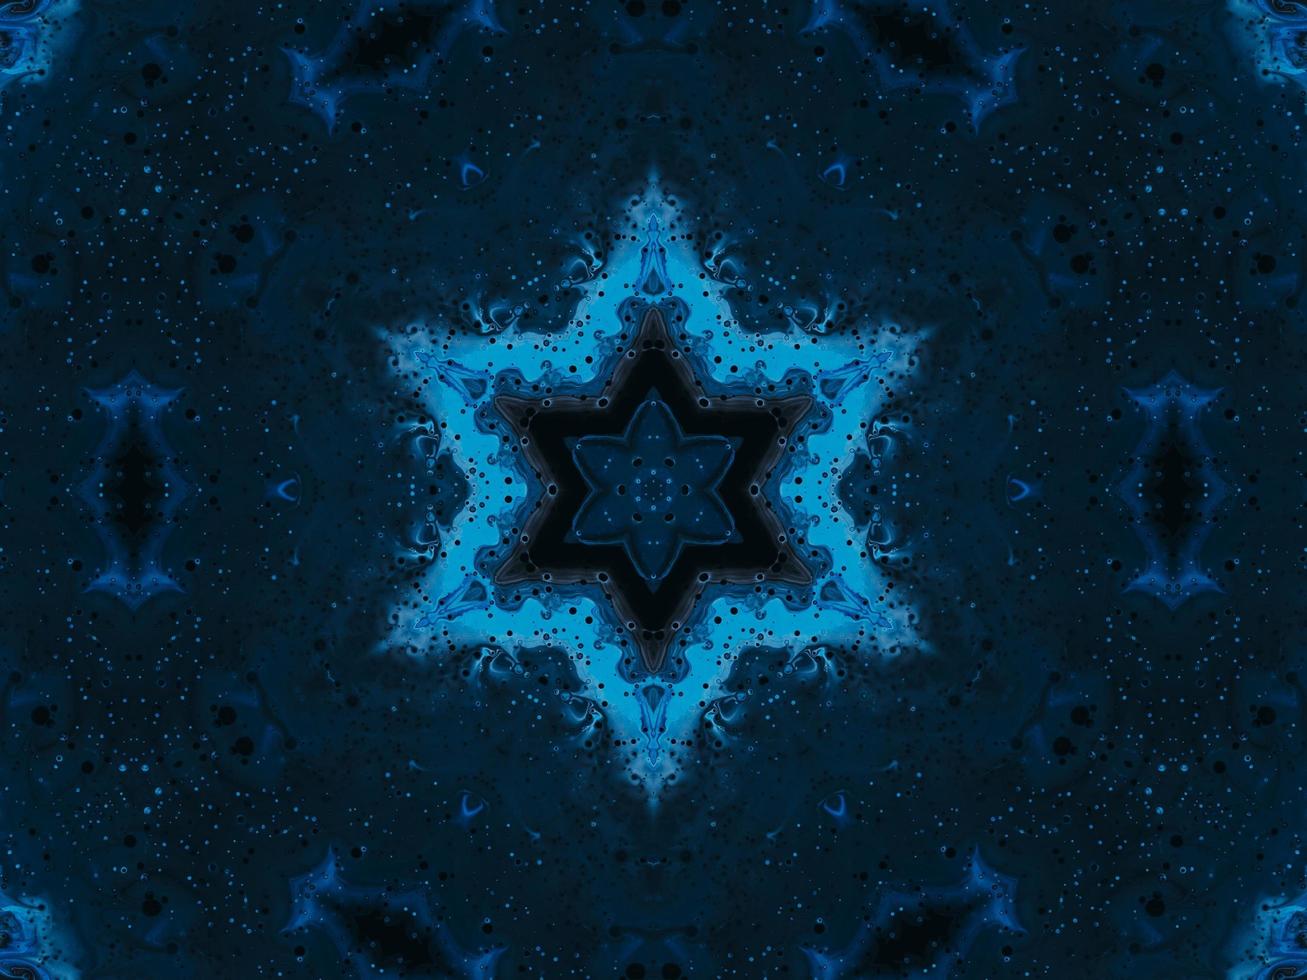 Frozen dark blue sea kaleidoscope pattern. Abstract background. Free photo. photo